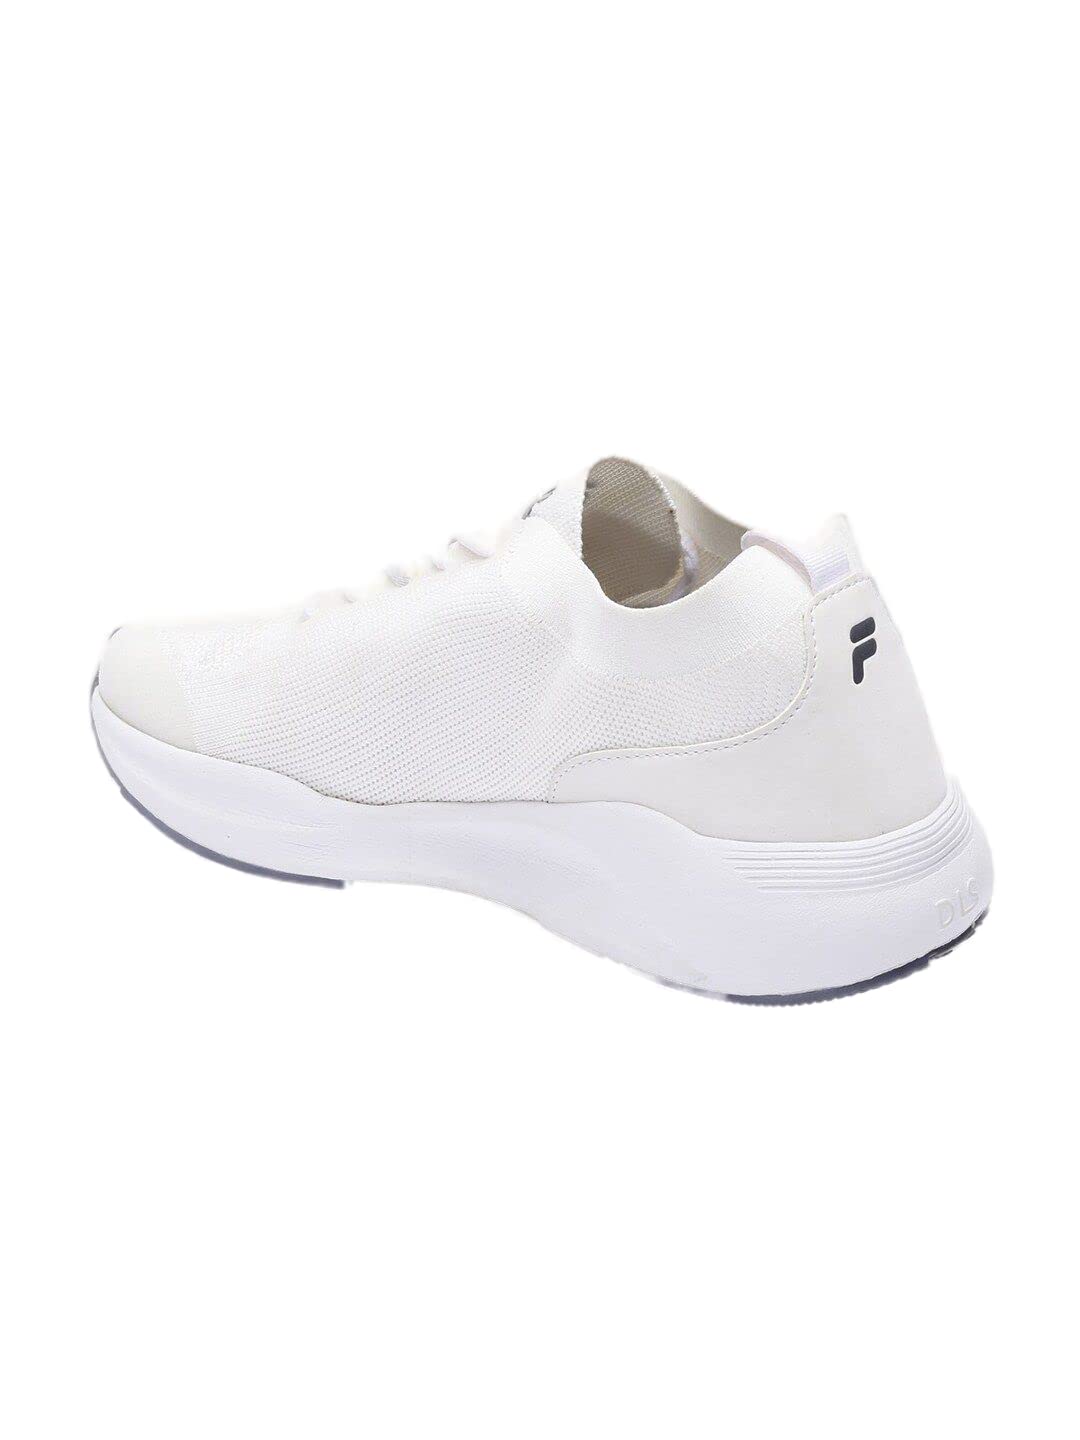 Fila Men's Fizer WHT/C ROC Sneaker (White) 